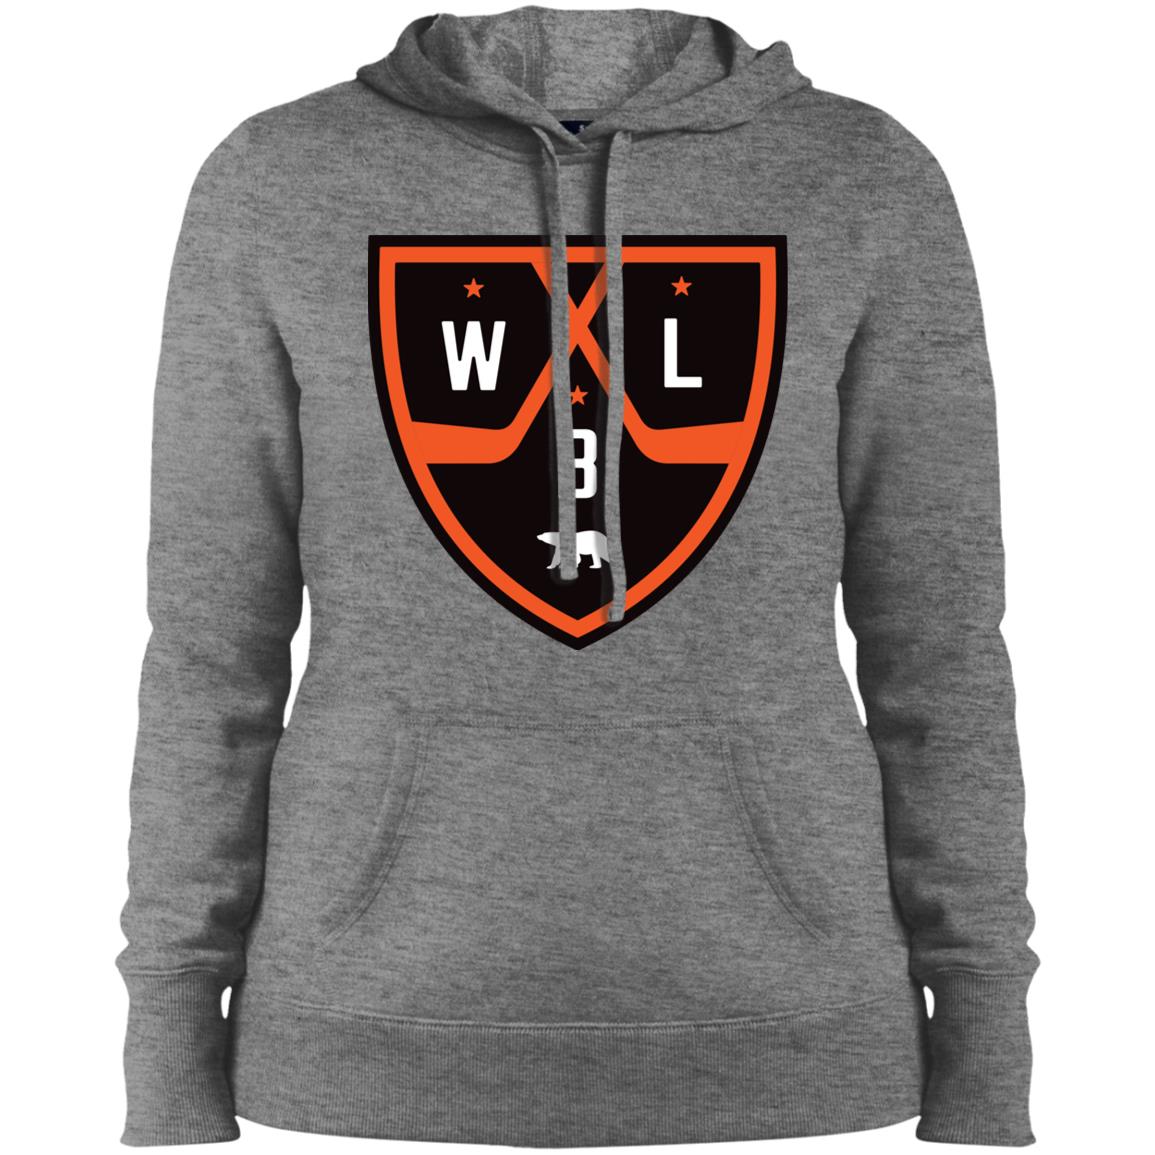 WBLAHA Shield Women's Pullover Hooded Sweatshirt